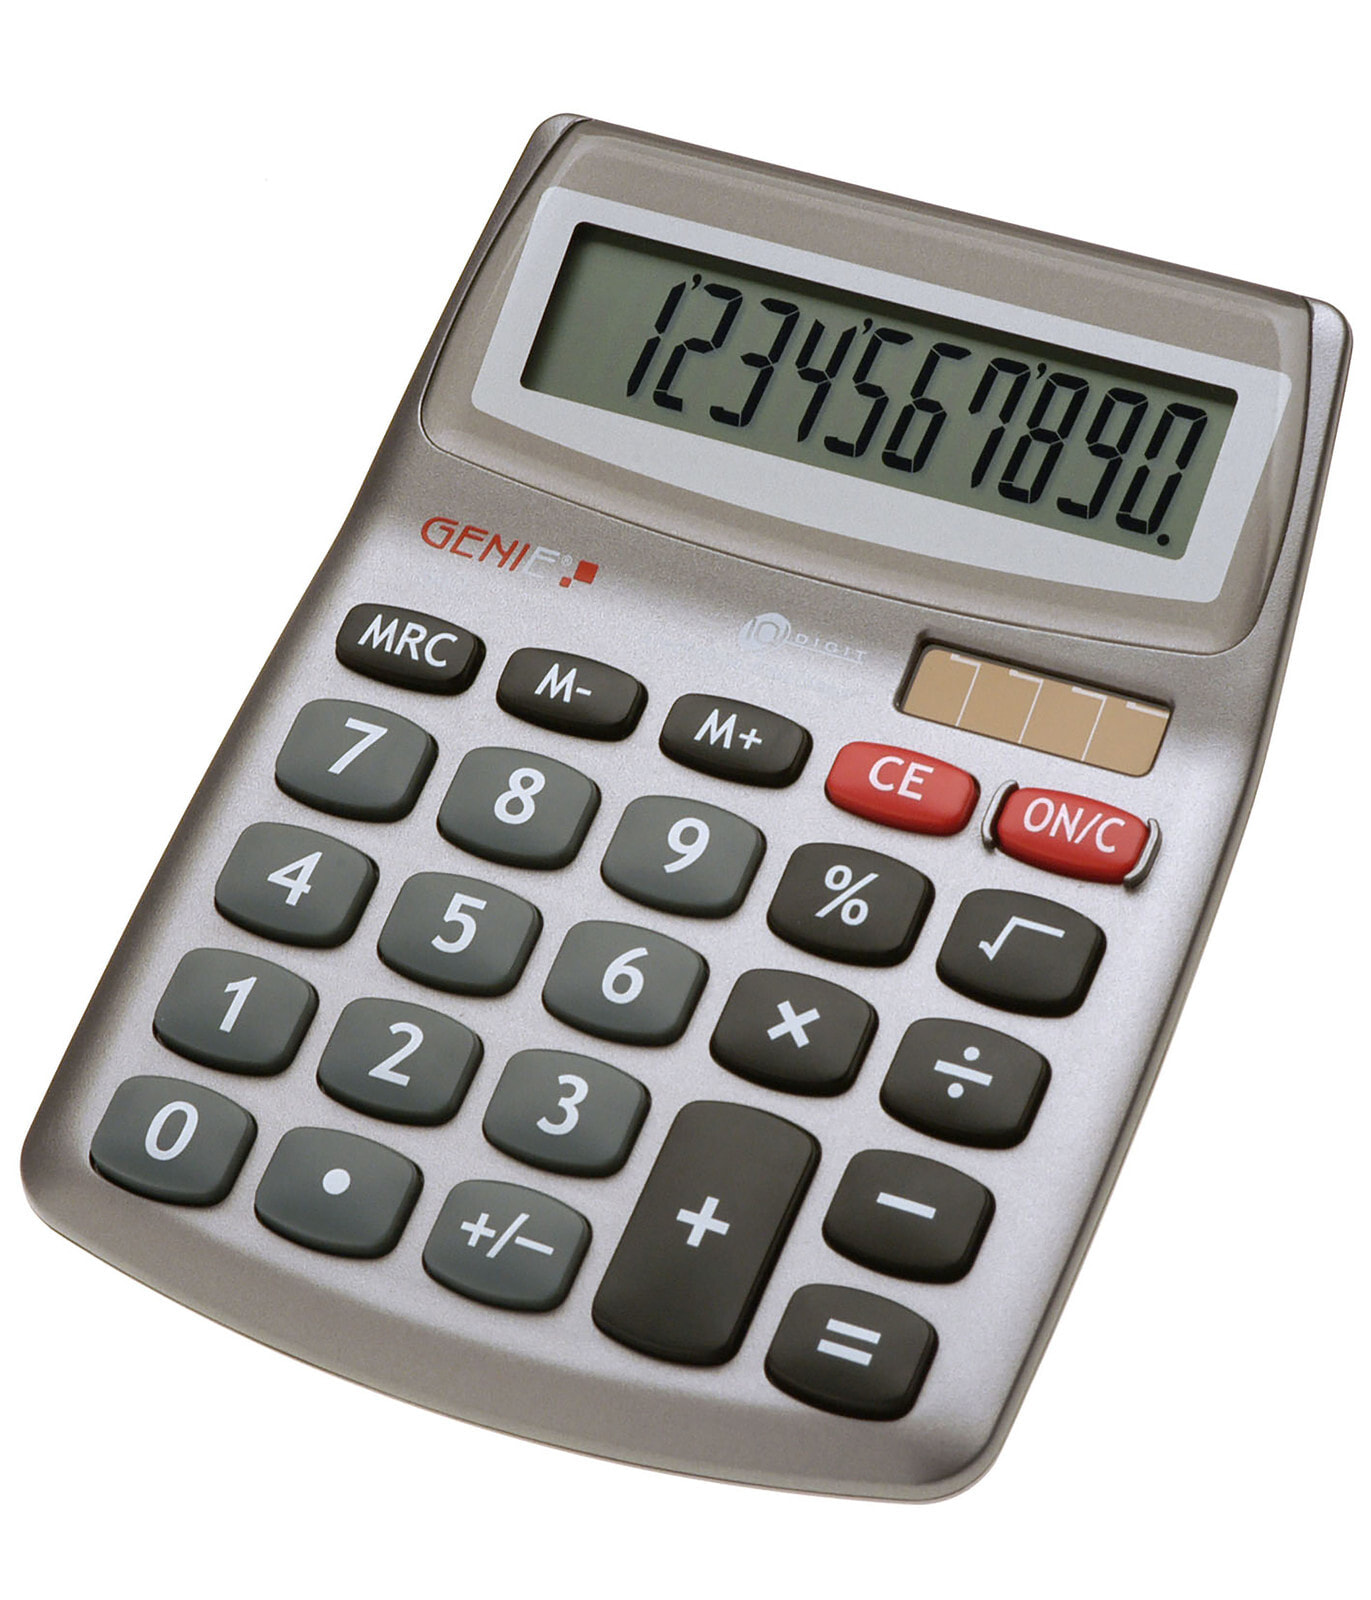 Genie 540 калькулятор Настольный Дисплей Серый 10272